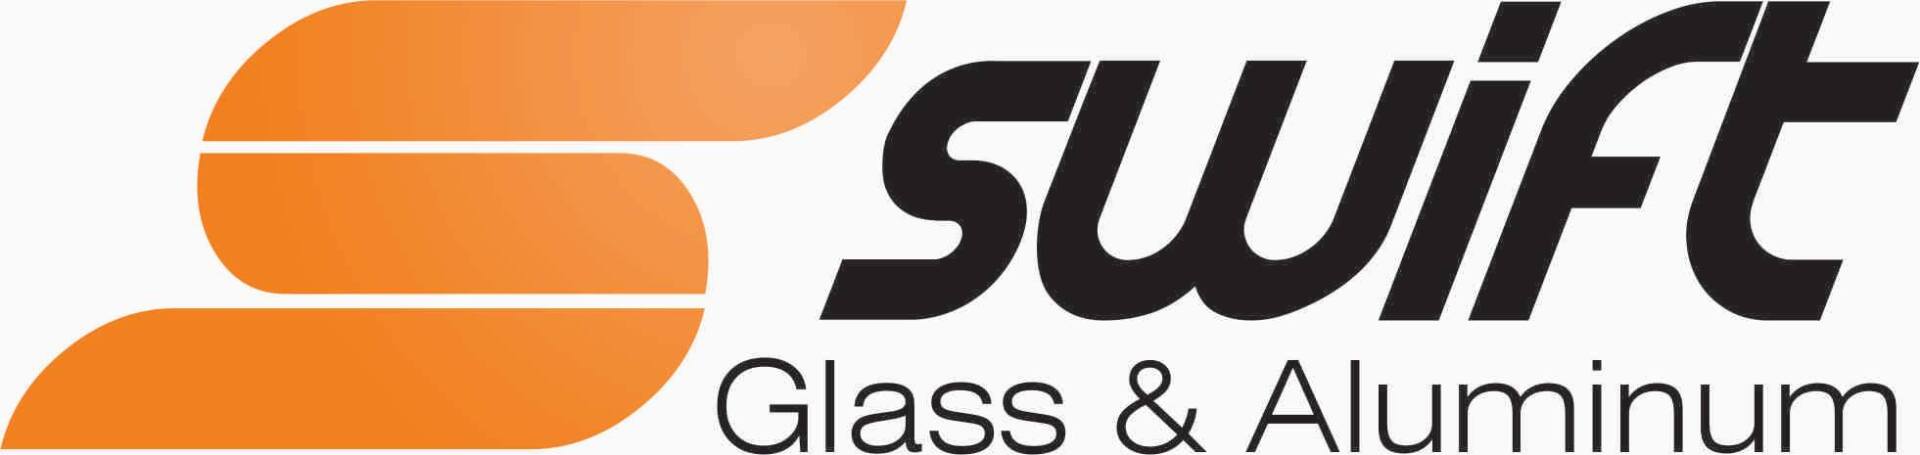 Swift Glass & Aluminium – Your Expert Glaziers in Coffs Harbour